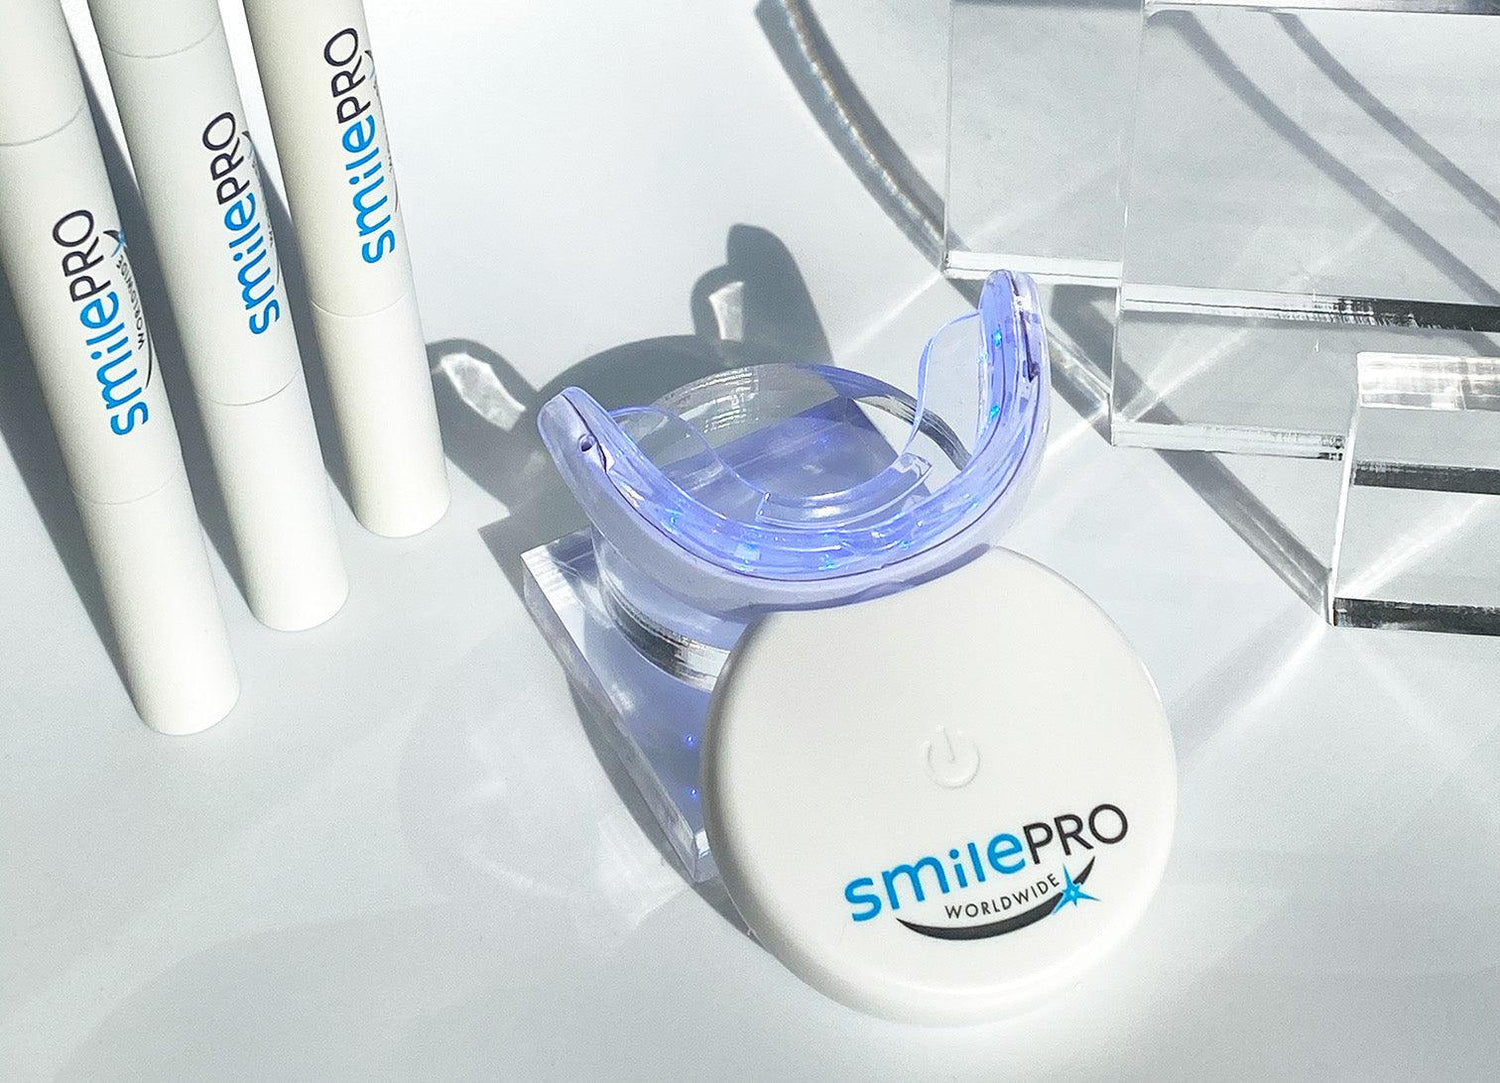 Professional Teeth Whitening - Kits vs Dentist - SmilePro Worldwide